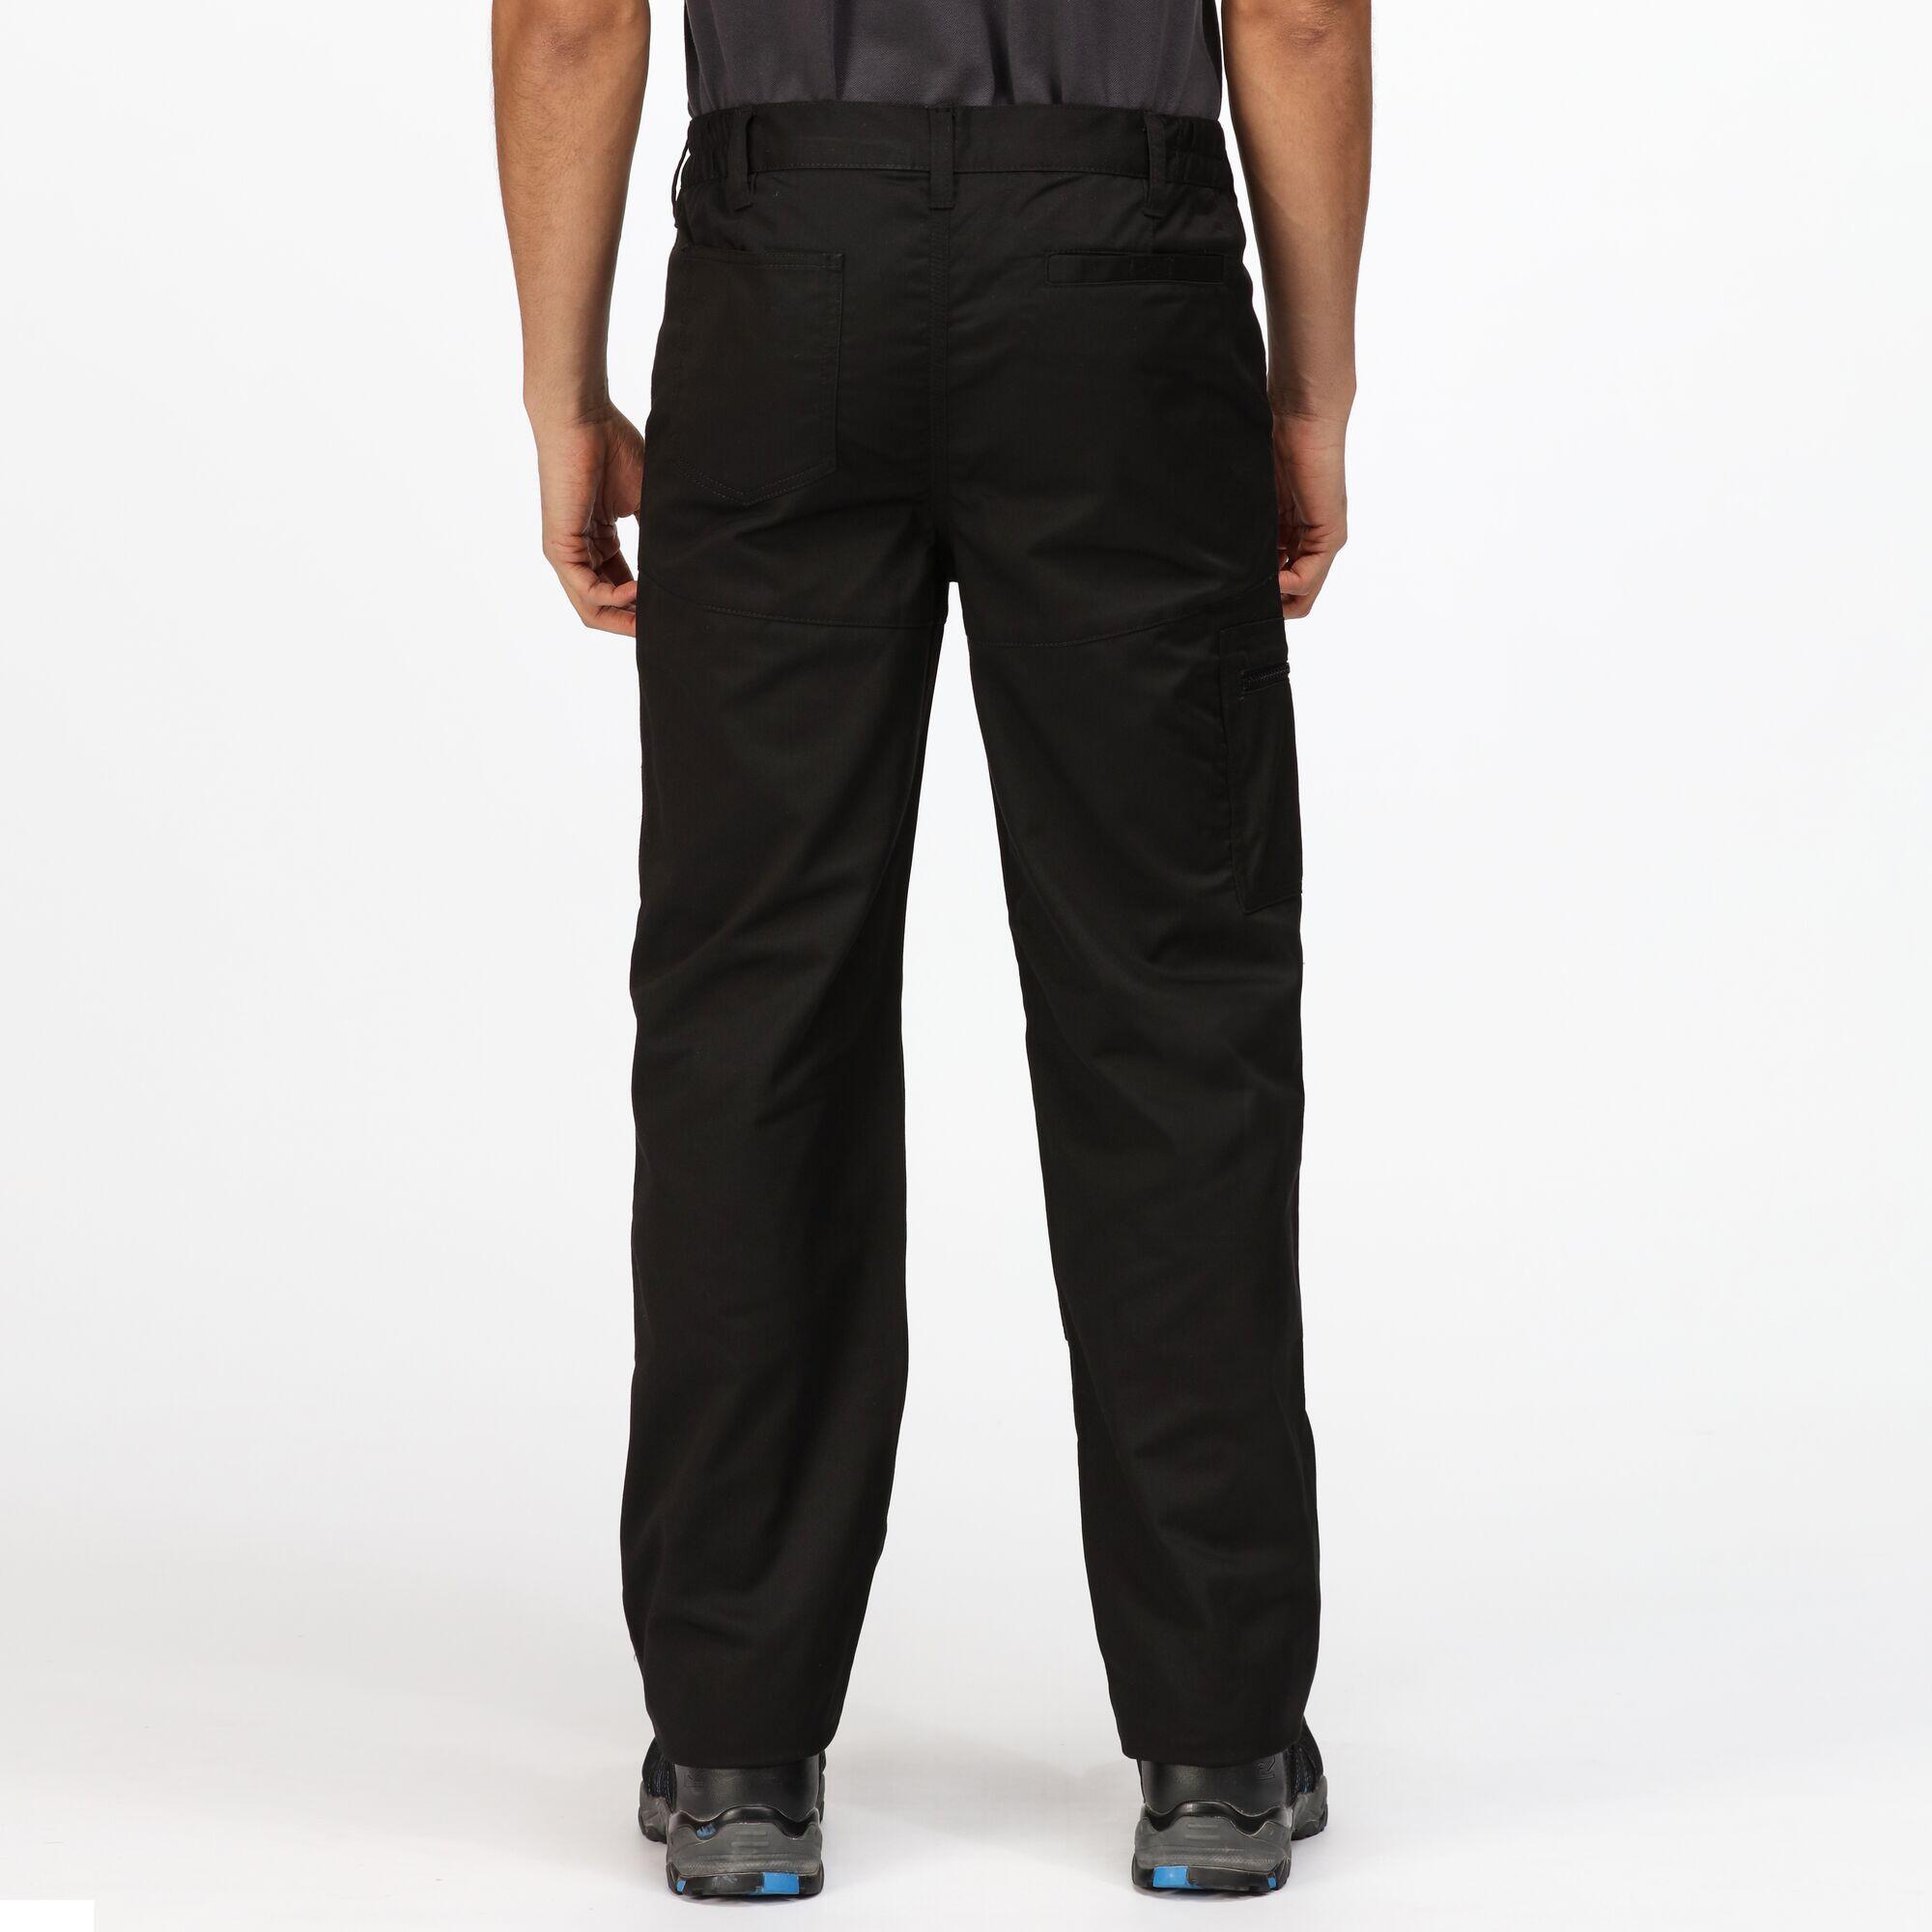 Mens Pro Action Waterproof Trousers Long (34in) (Traffic Black) 2/5